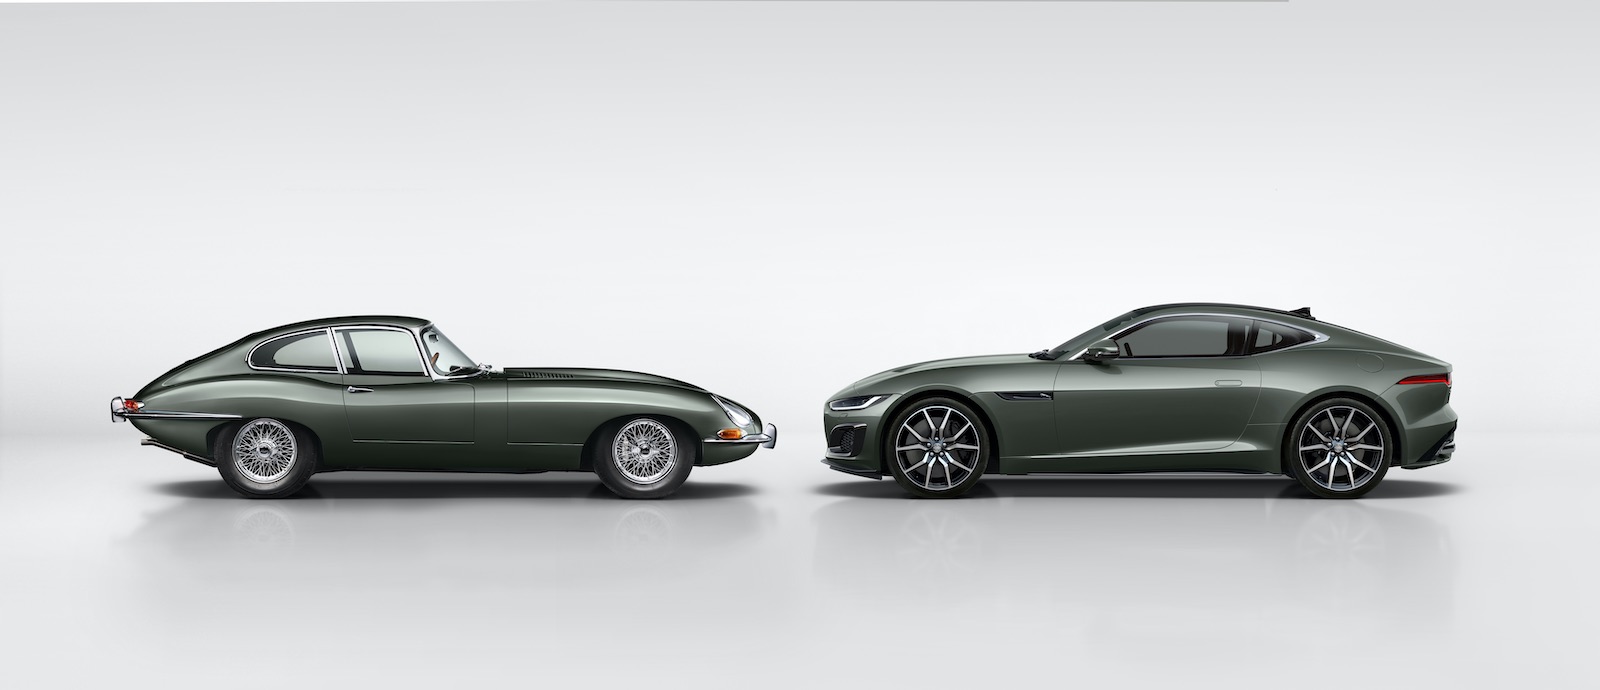 New Jaguar F-Type Heritage 60 Edition announced